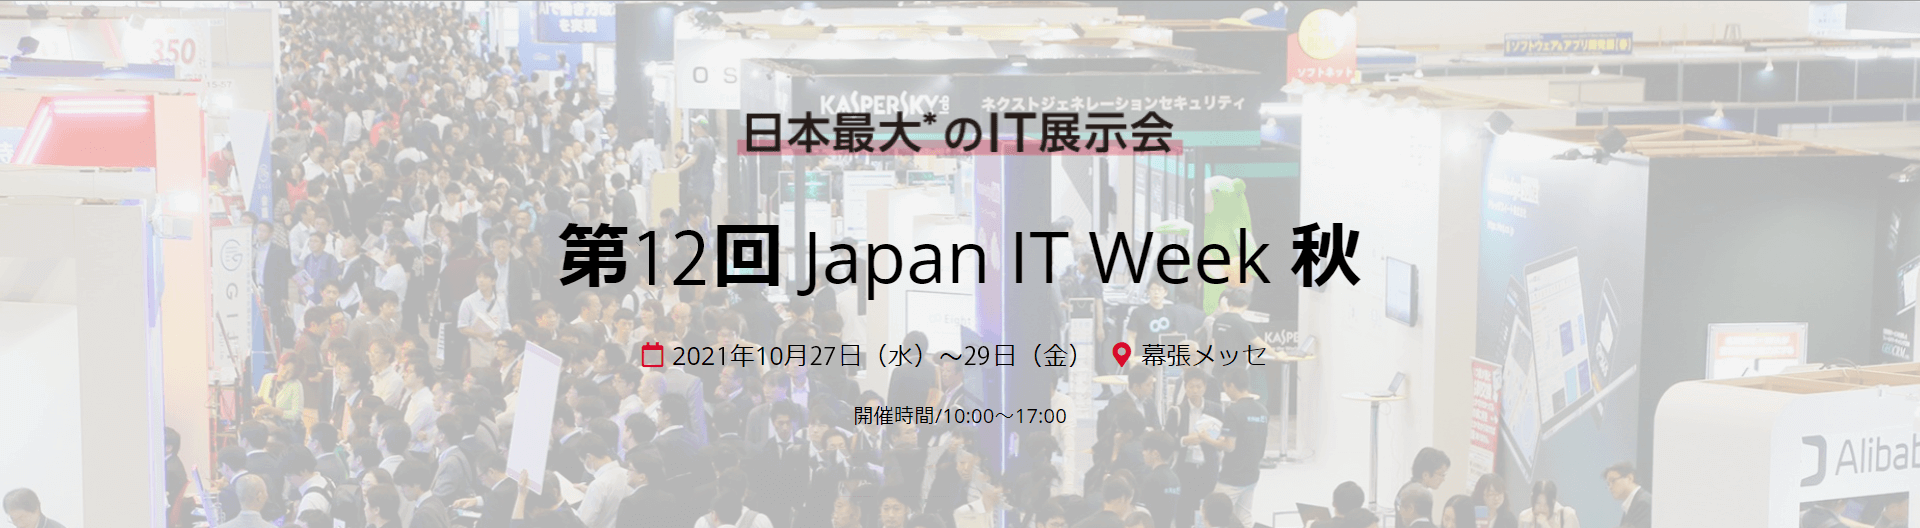 第12回 Japan IT Week 秋